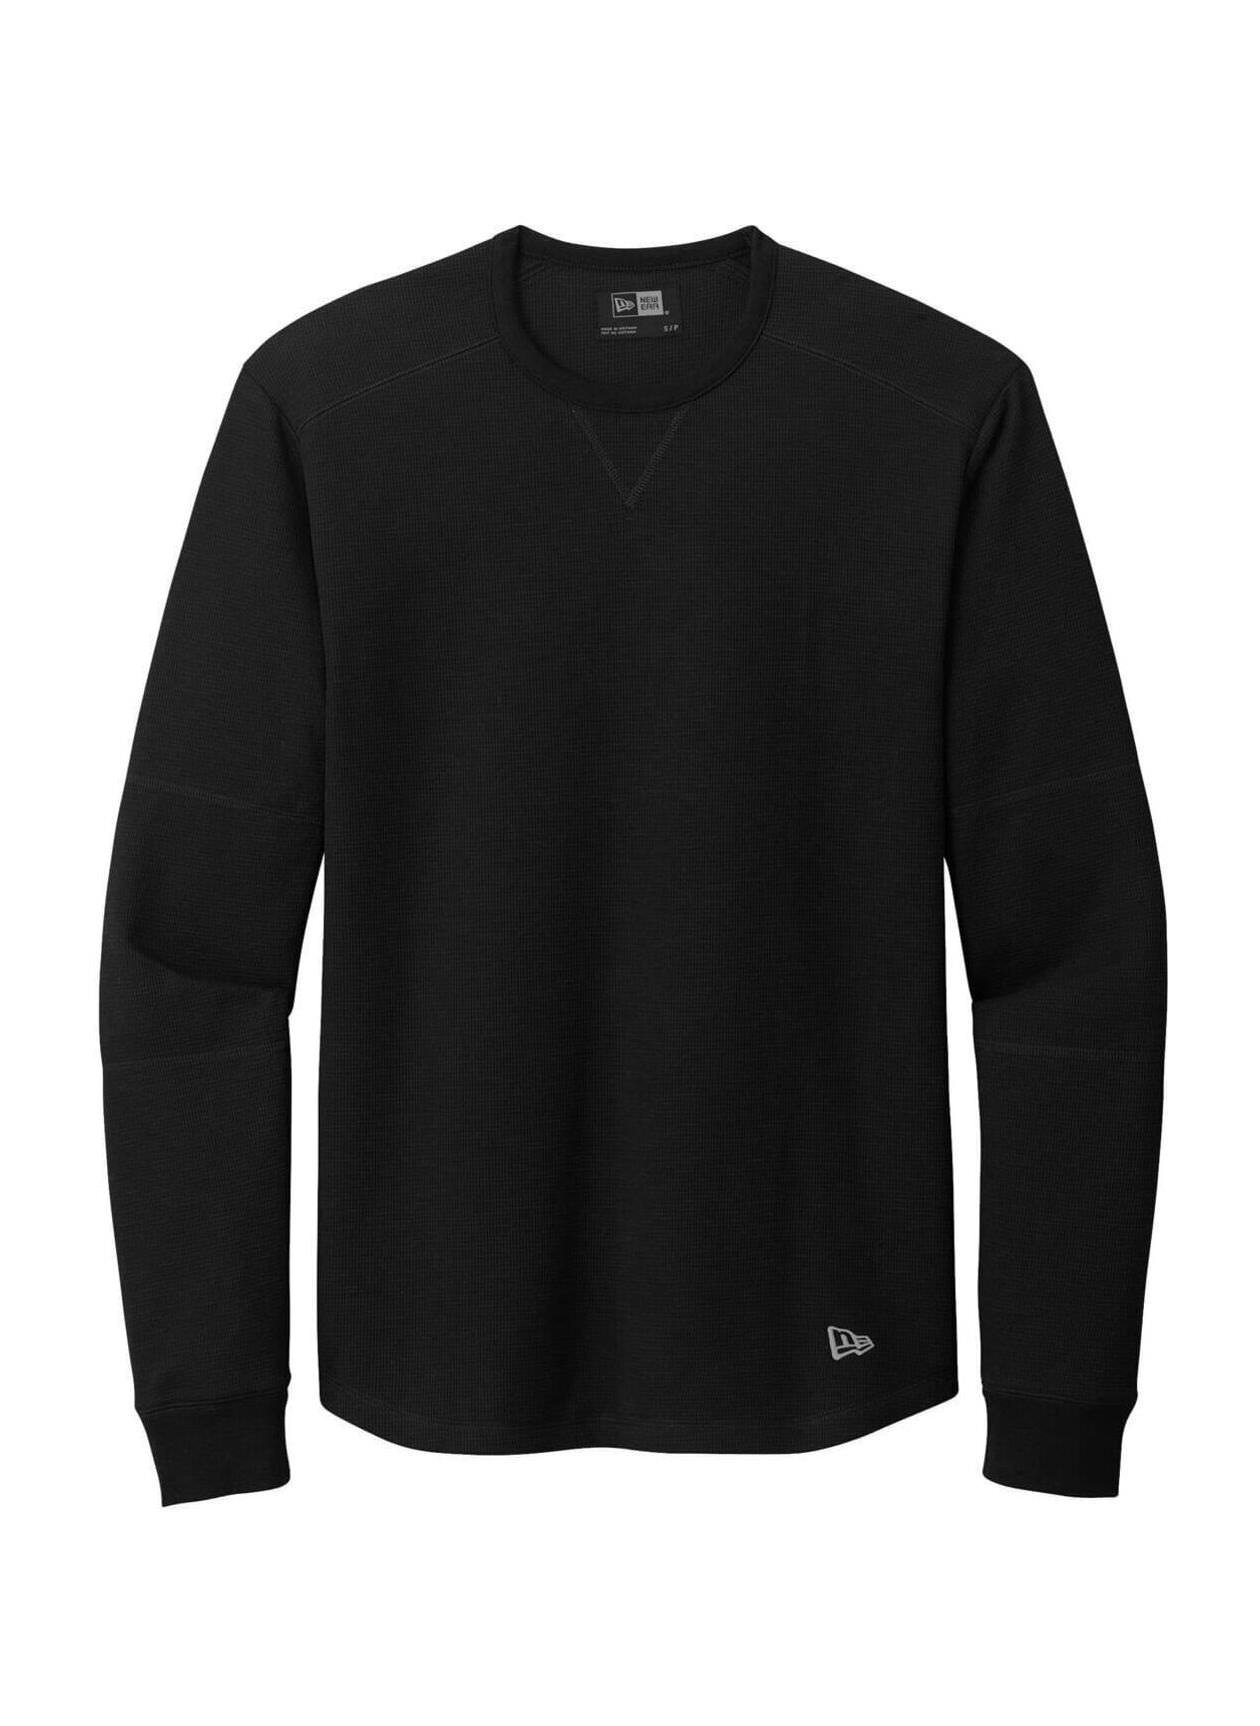 New Era Men's Black Thermal Long-Sleeve T-Shirt